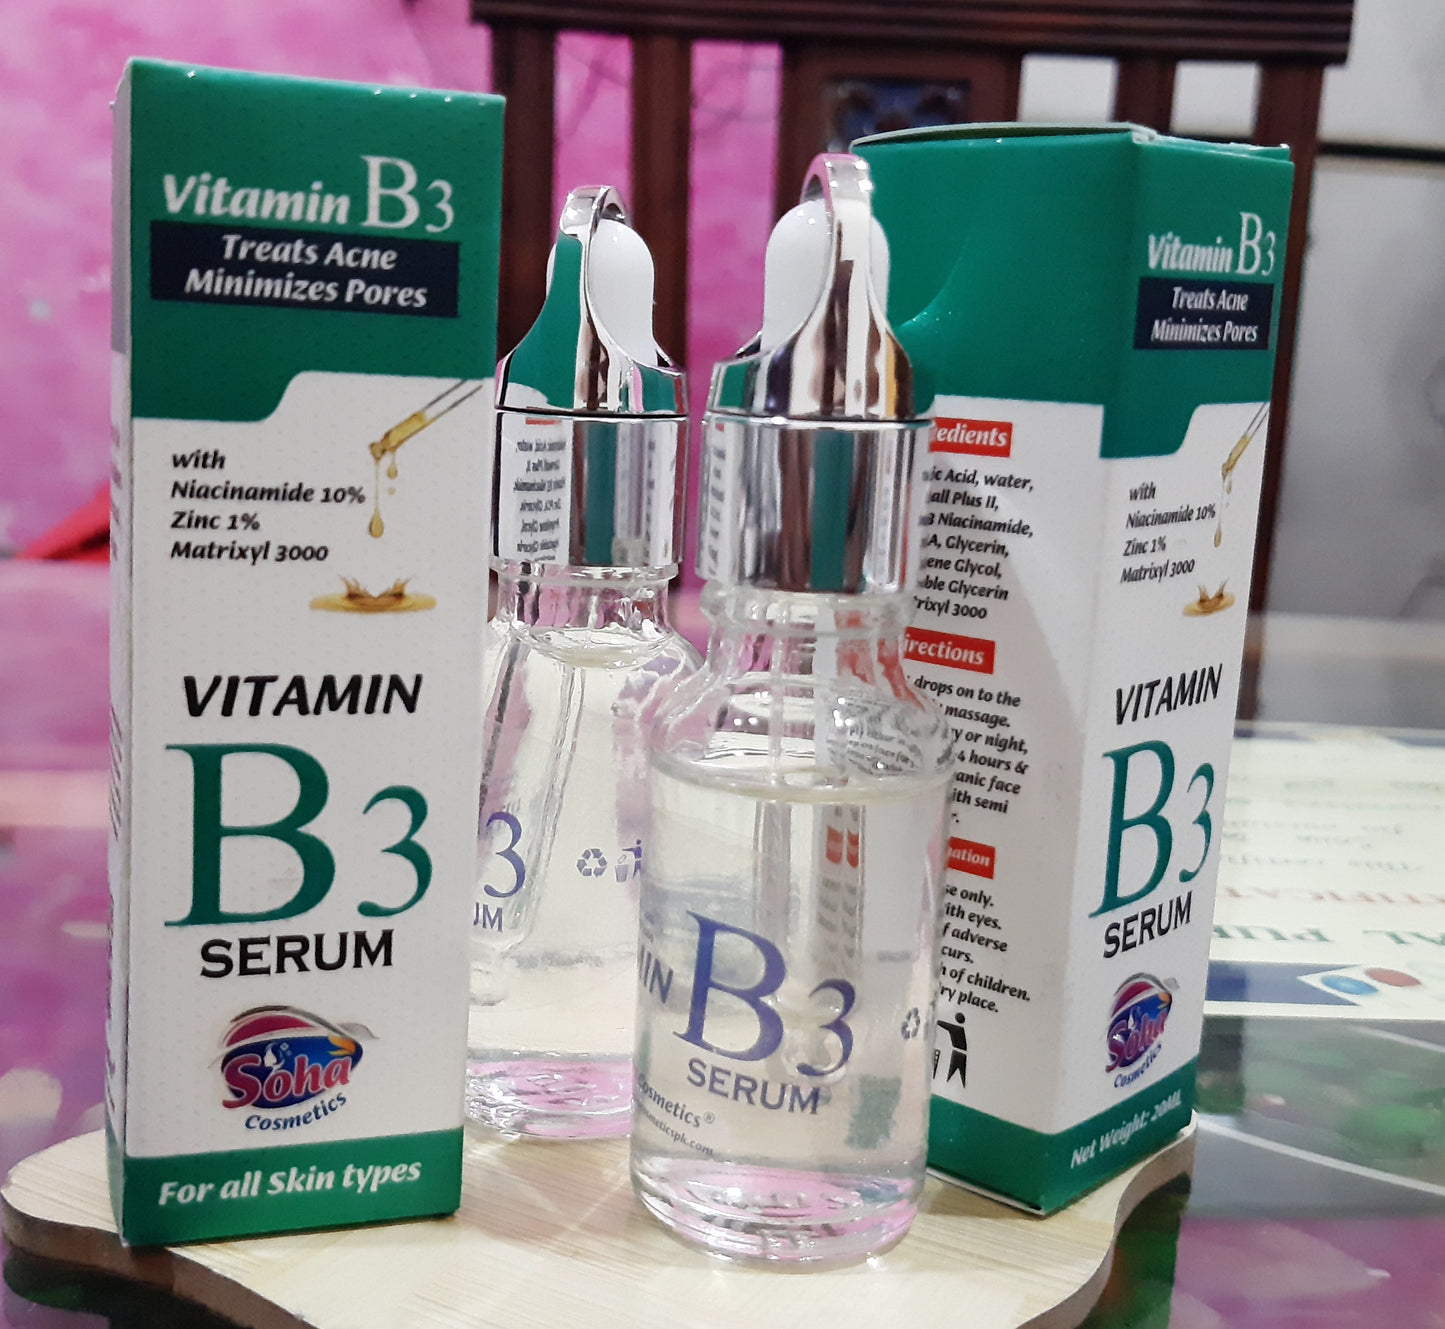 Vitamin B3 Serum for Acne, Pore Minimizing